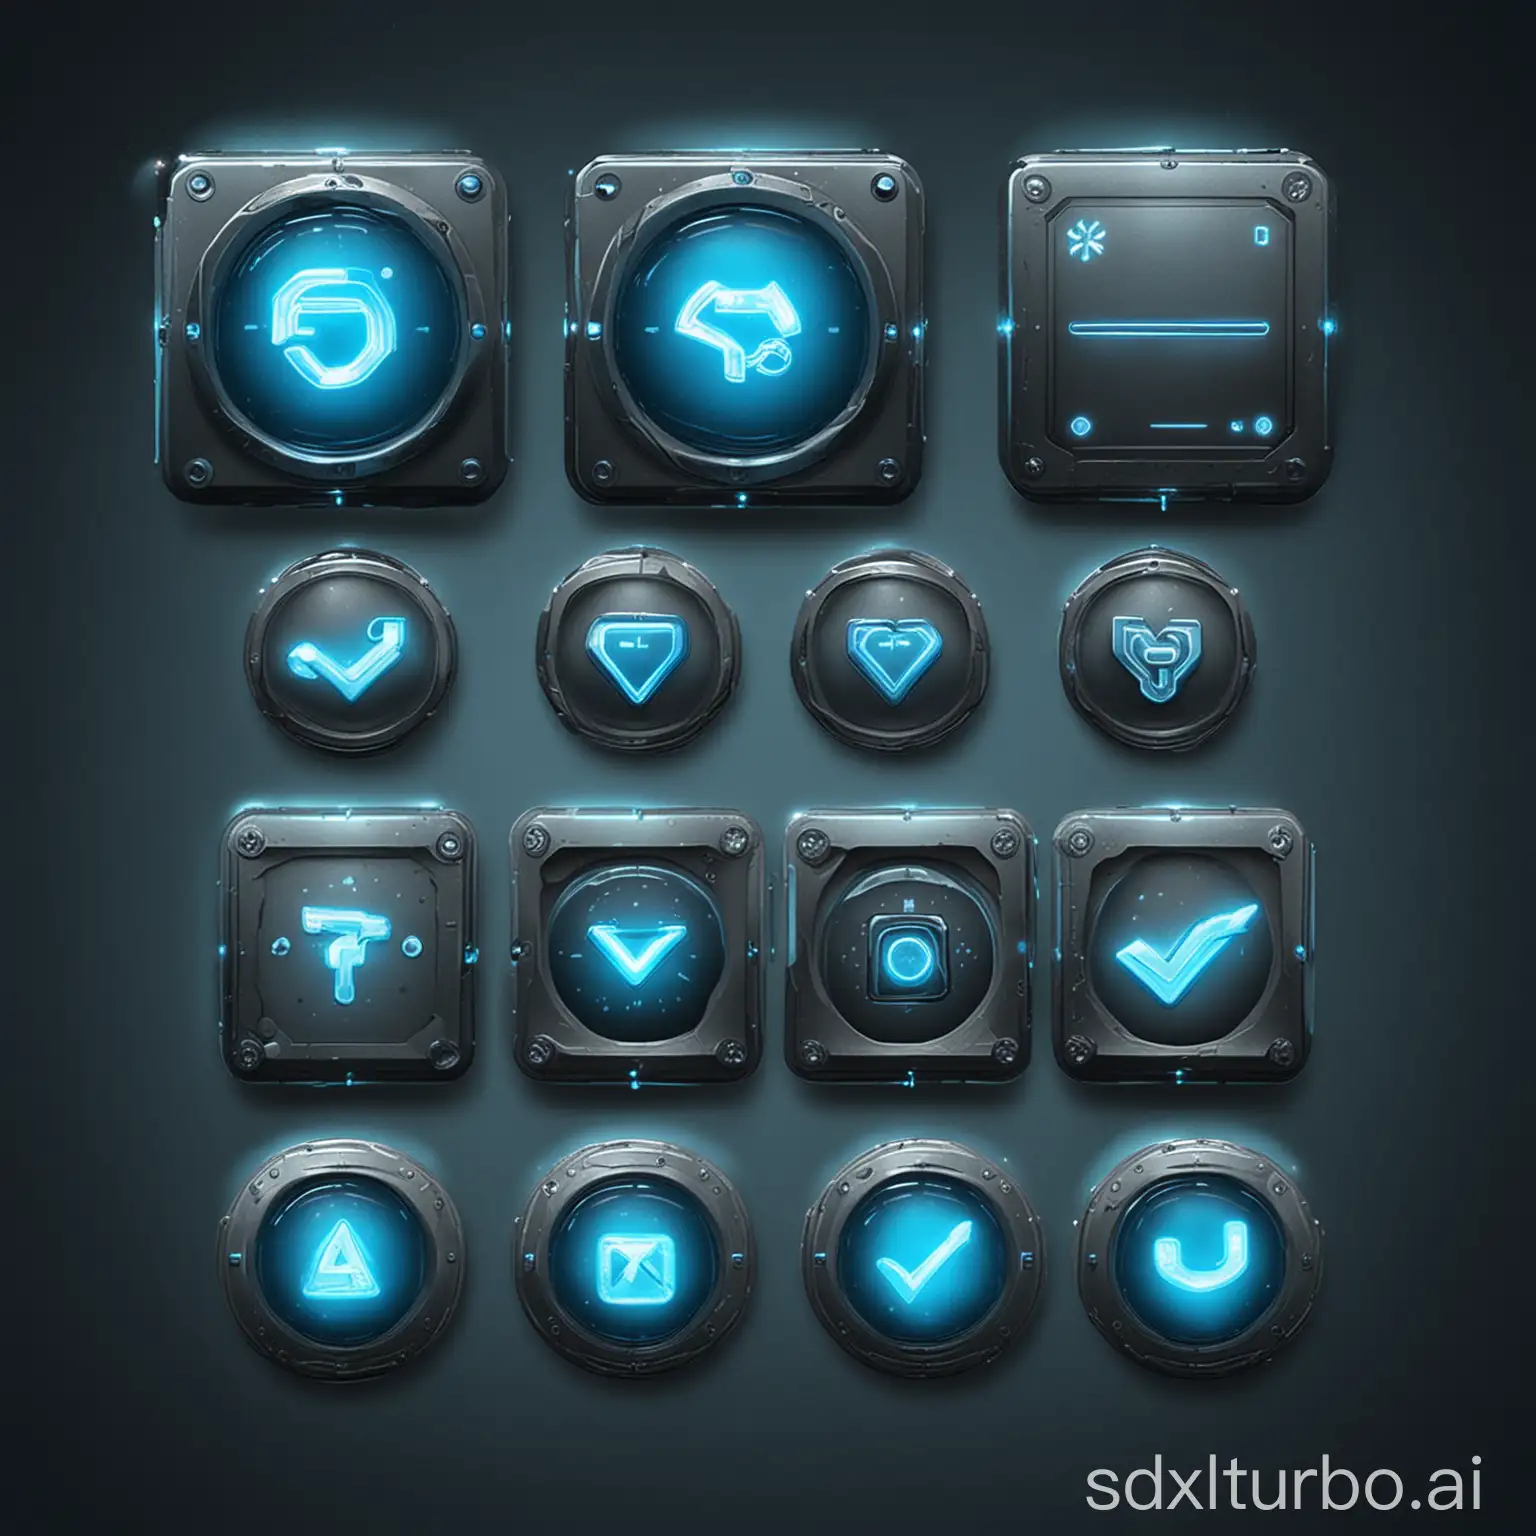 Metallic-Checkbox-Menu-Icons-for-Space-Game-GUI